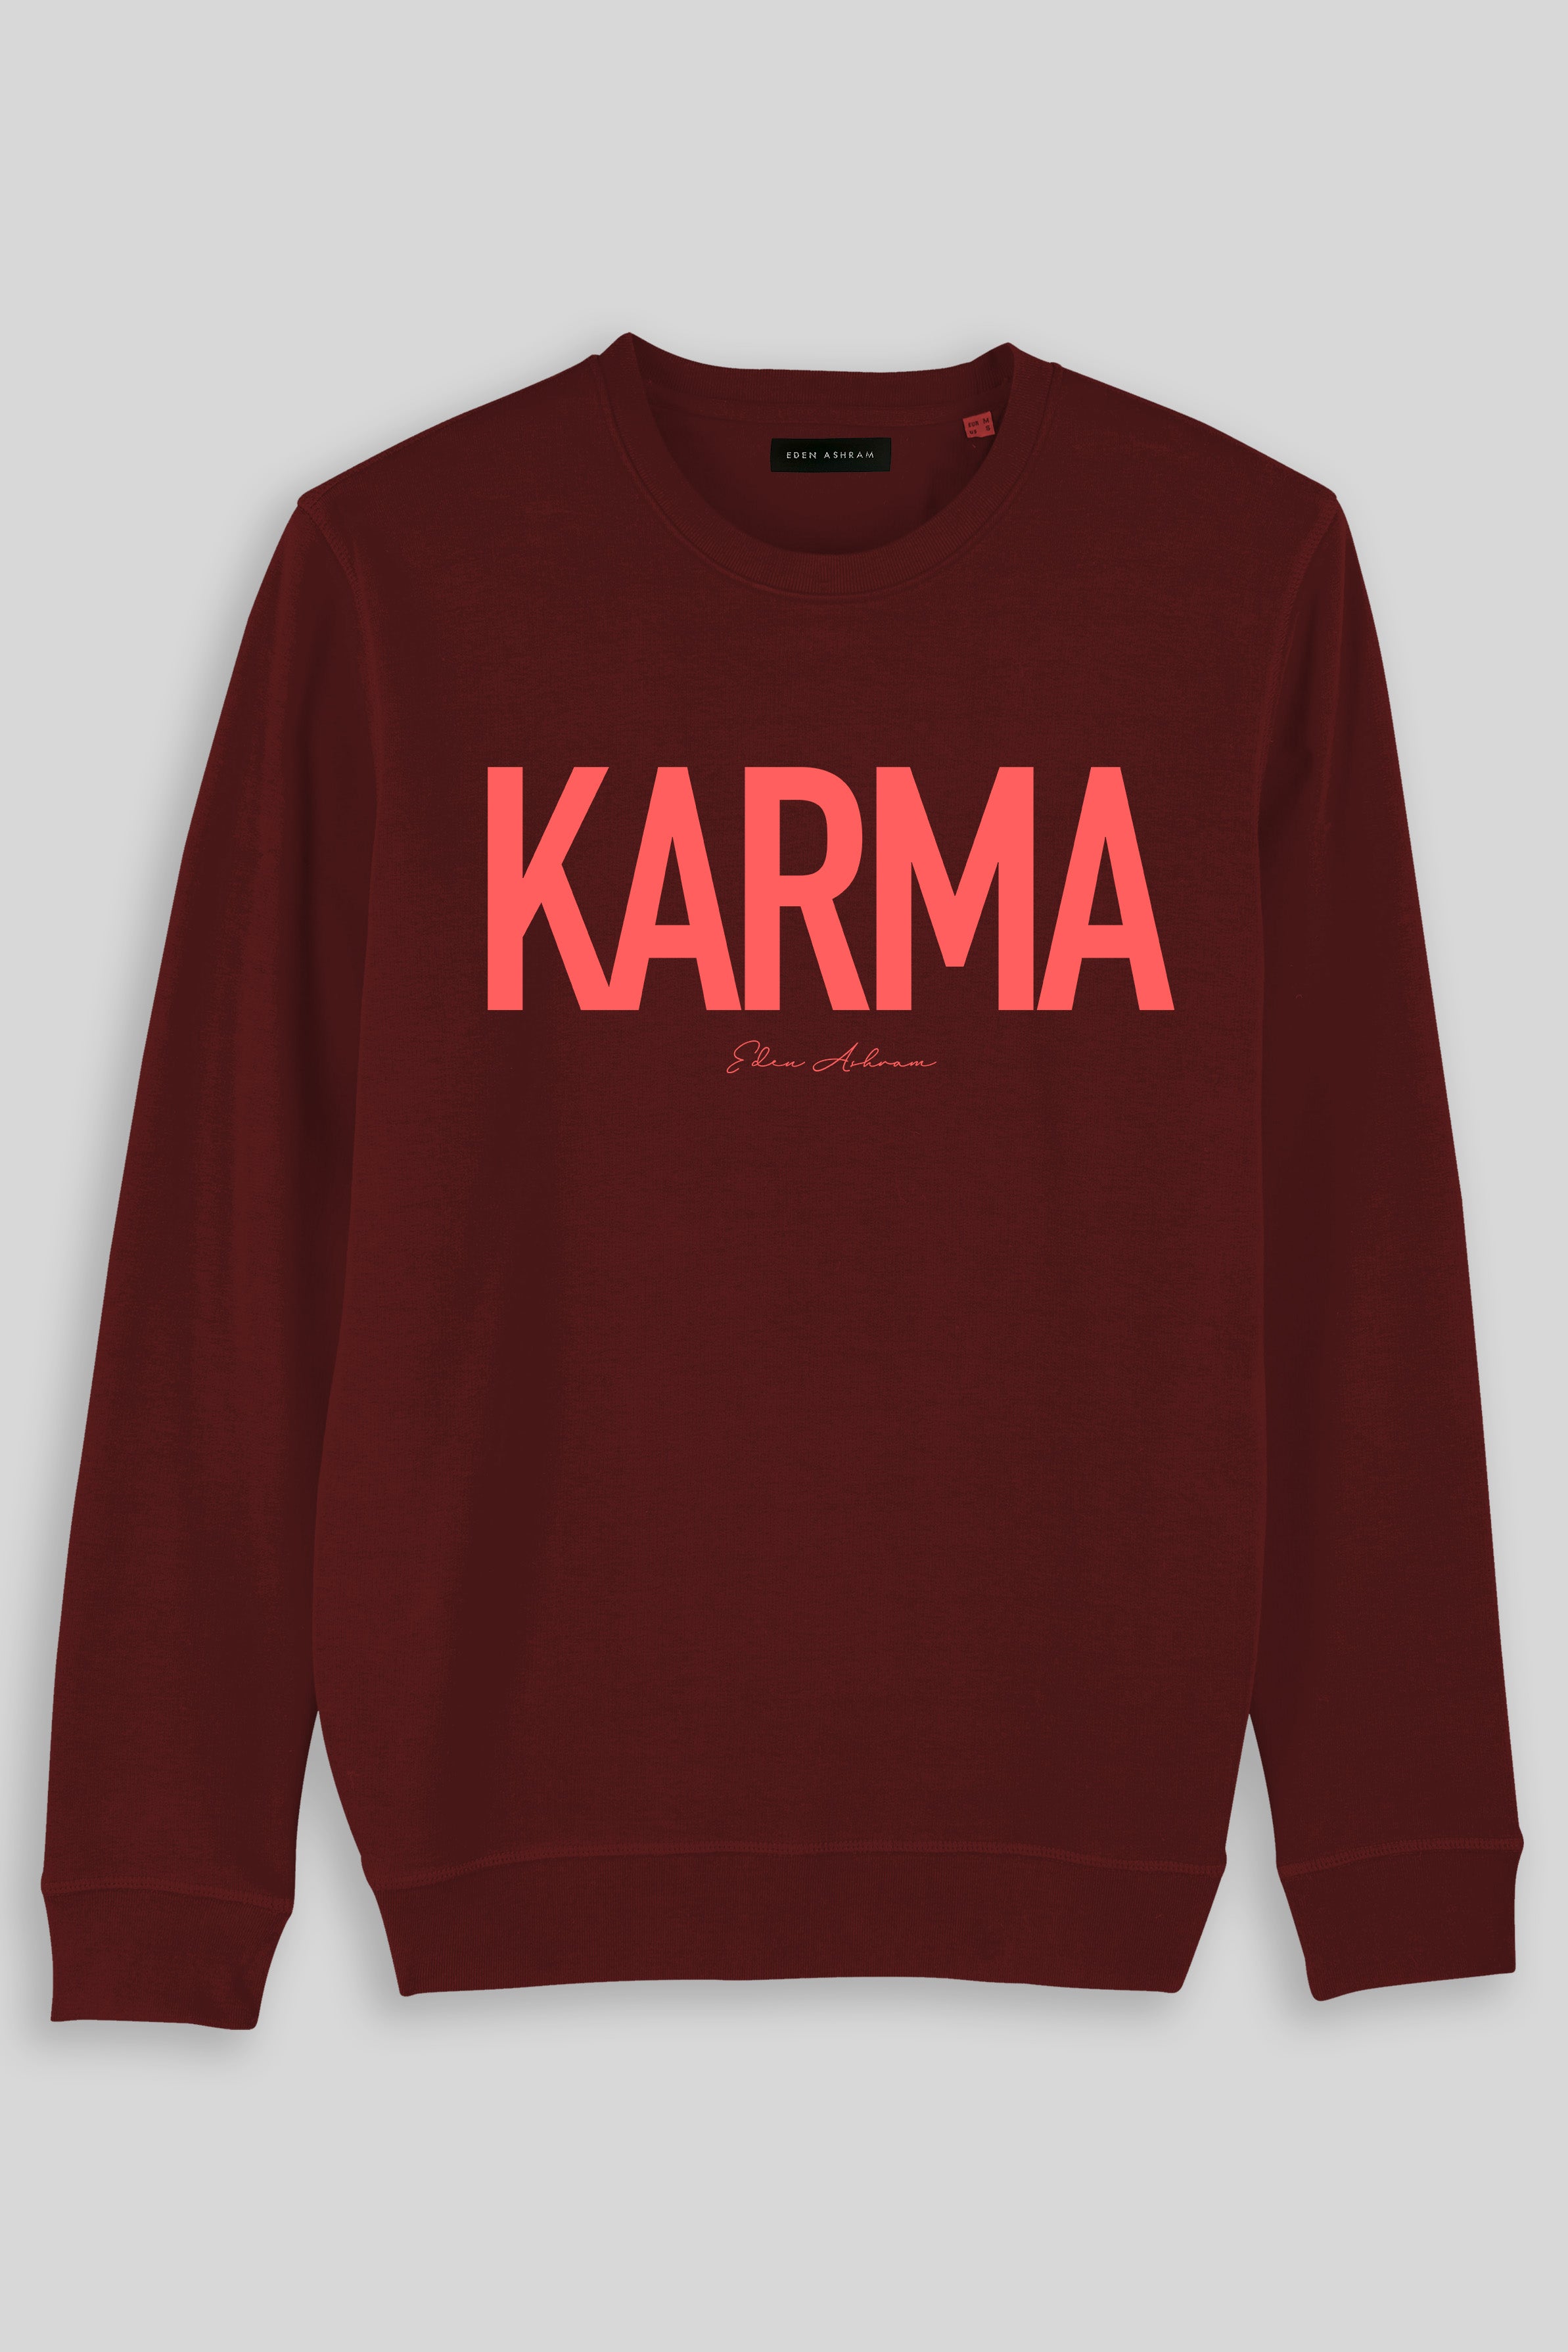 Eden Ashram Karma Premium Crew Neck Sweatshirt Burgundy